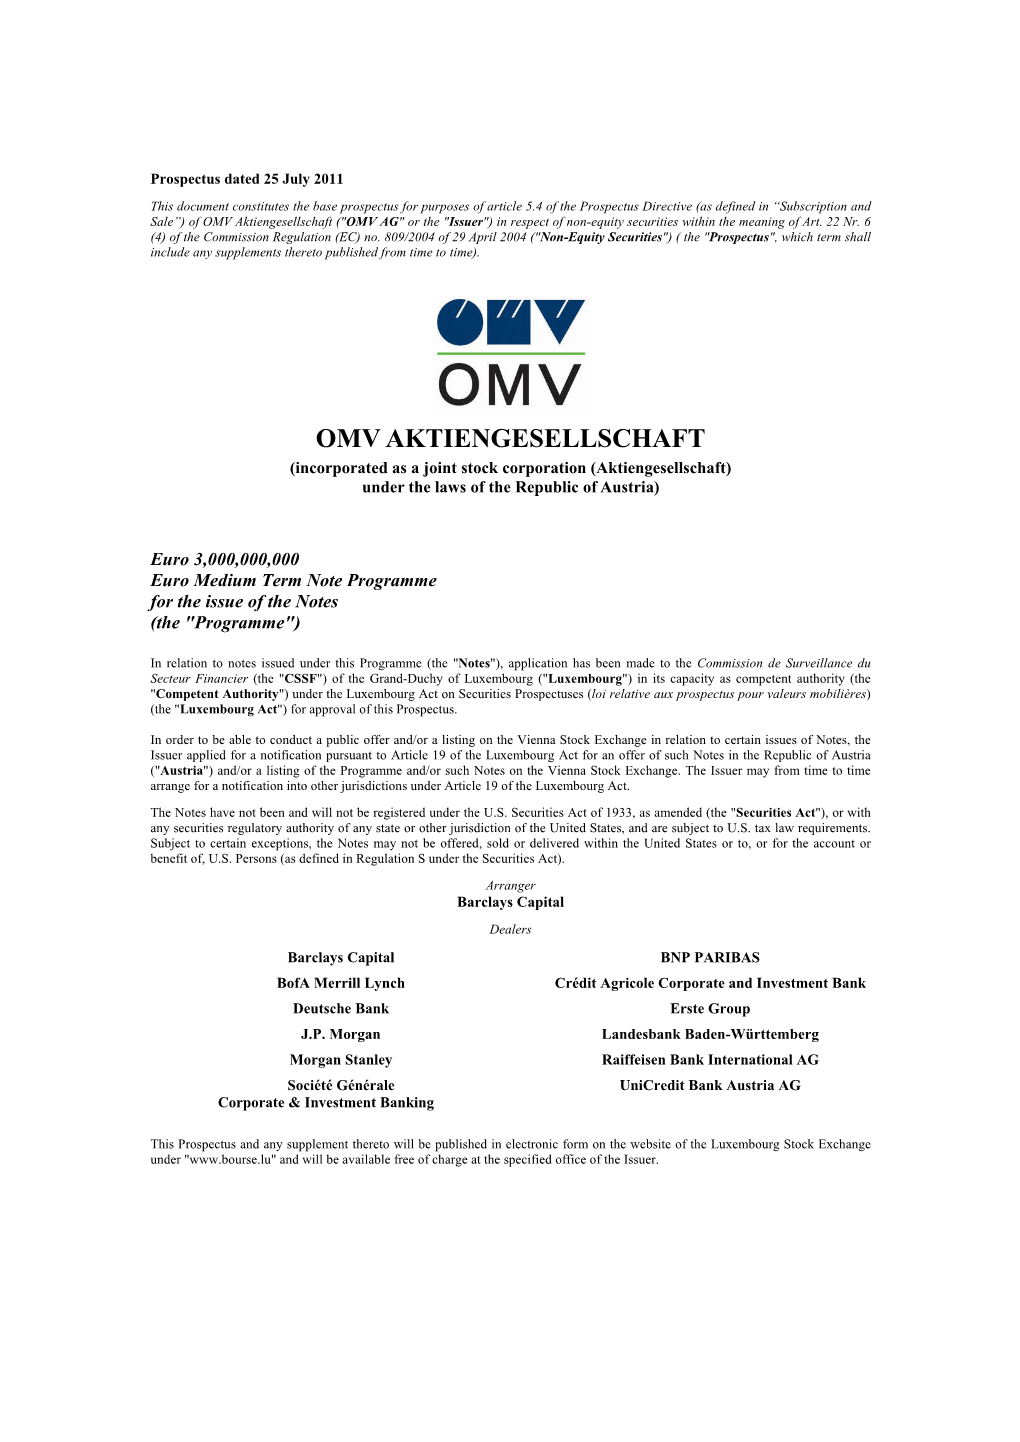 OMV Update 2011, Prospectus